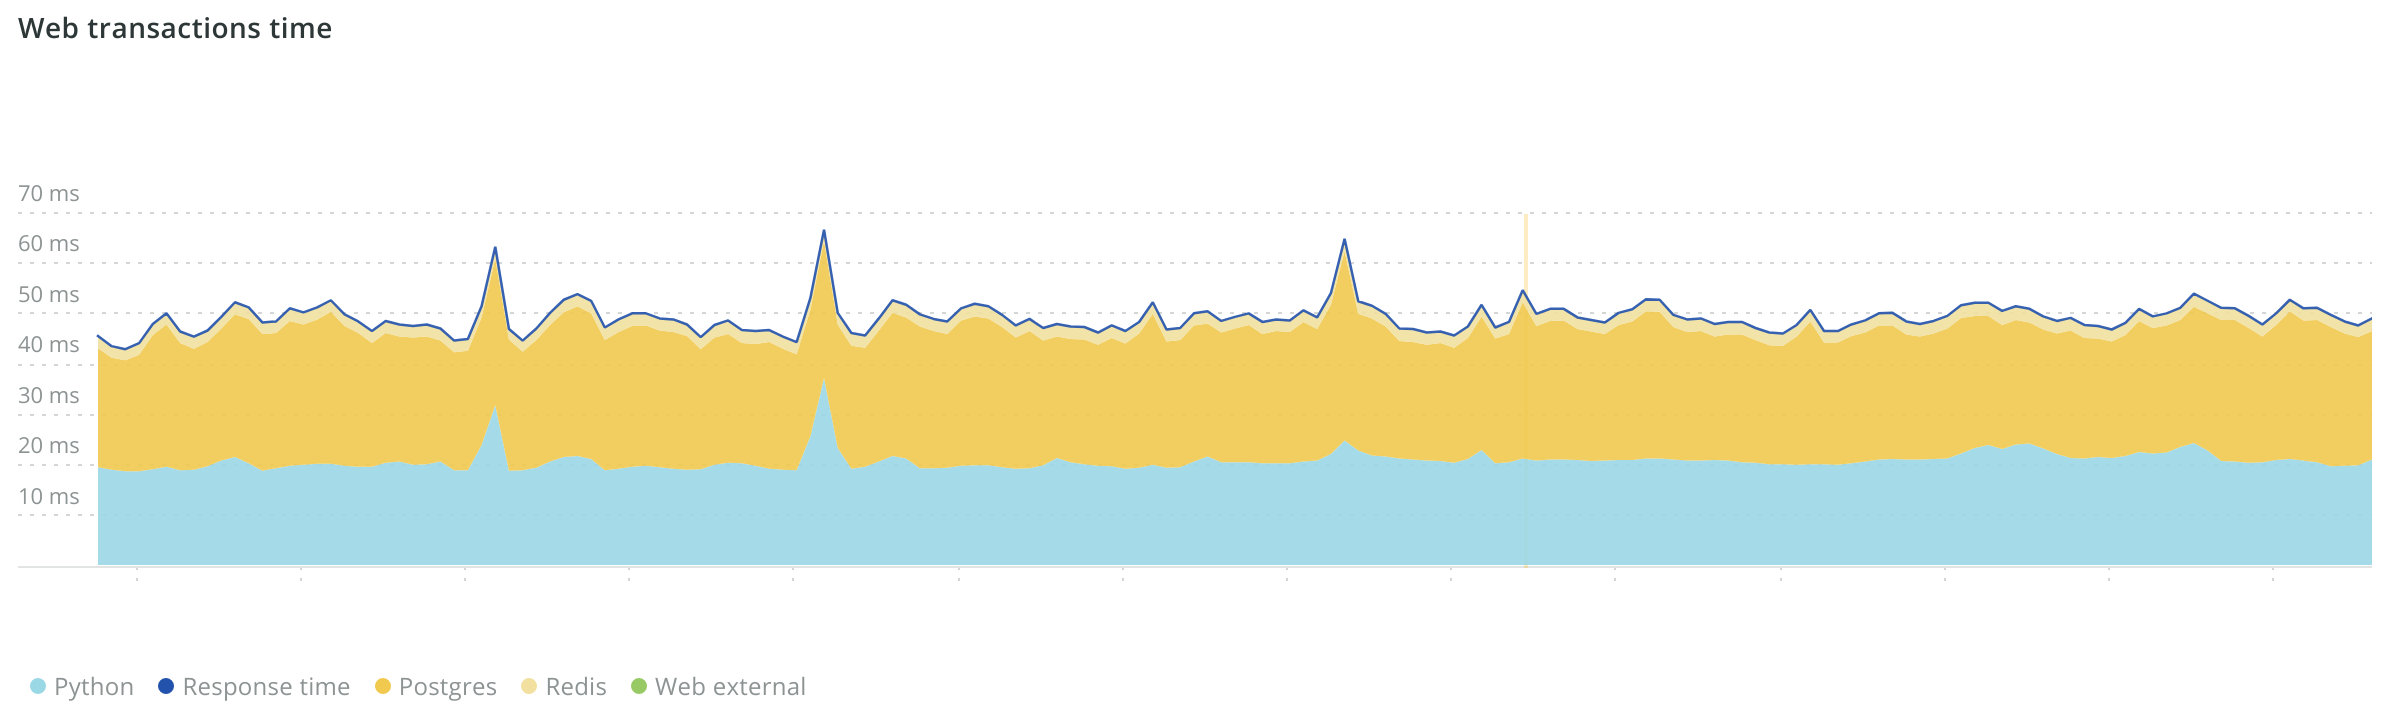 Performance breakdown of the ad server